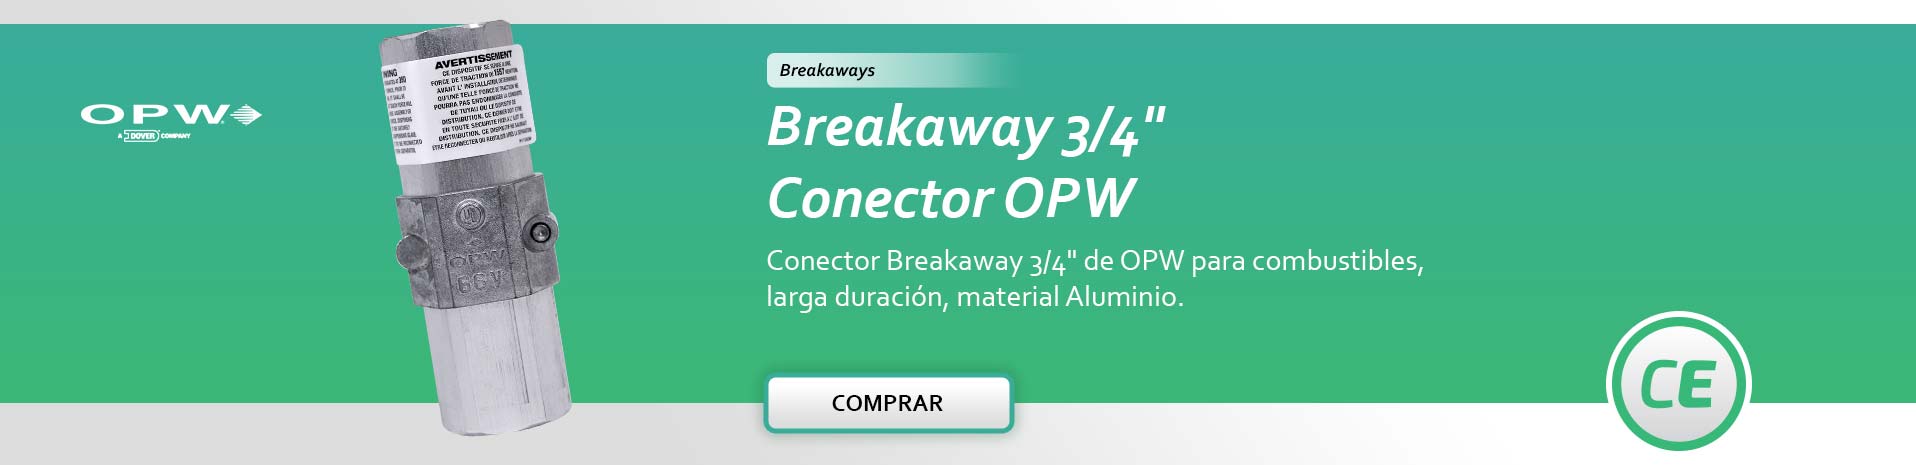 Breakaways OPW  -  Combustible Ecológicos